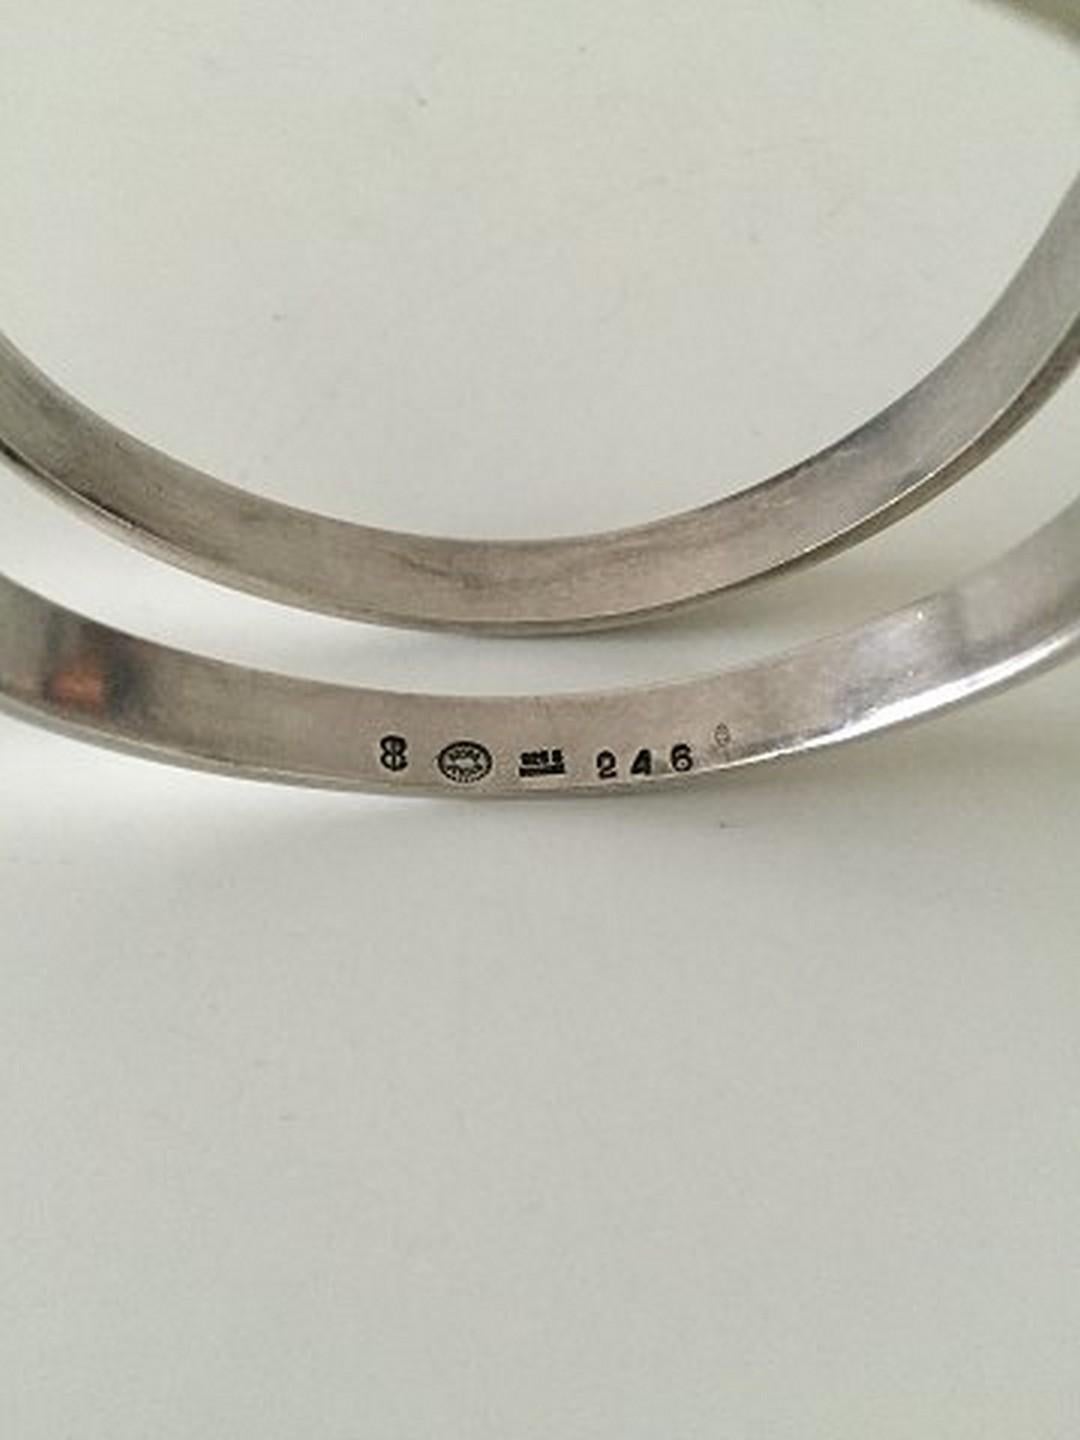 Georg Jensen Sterling Silver Bracelet by Bent Gabrielsen #246. Inner measurements on the bracelet is 6 cm / 2 23/64